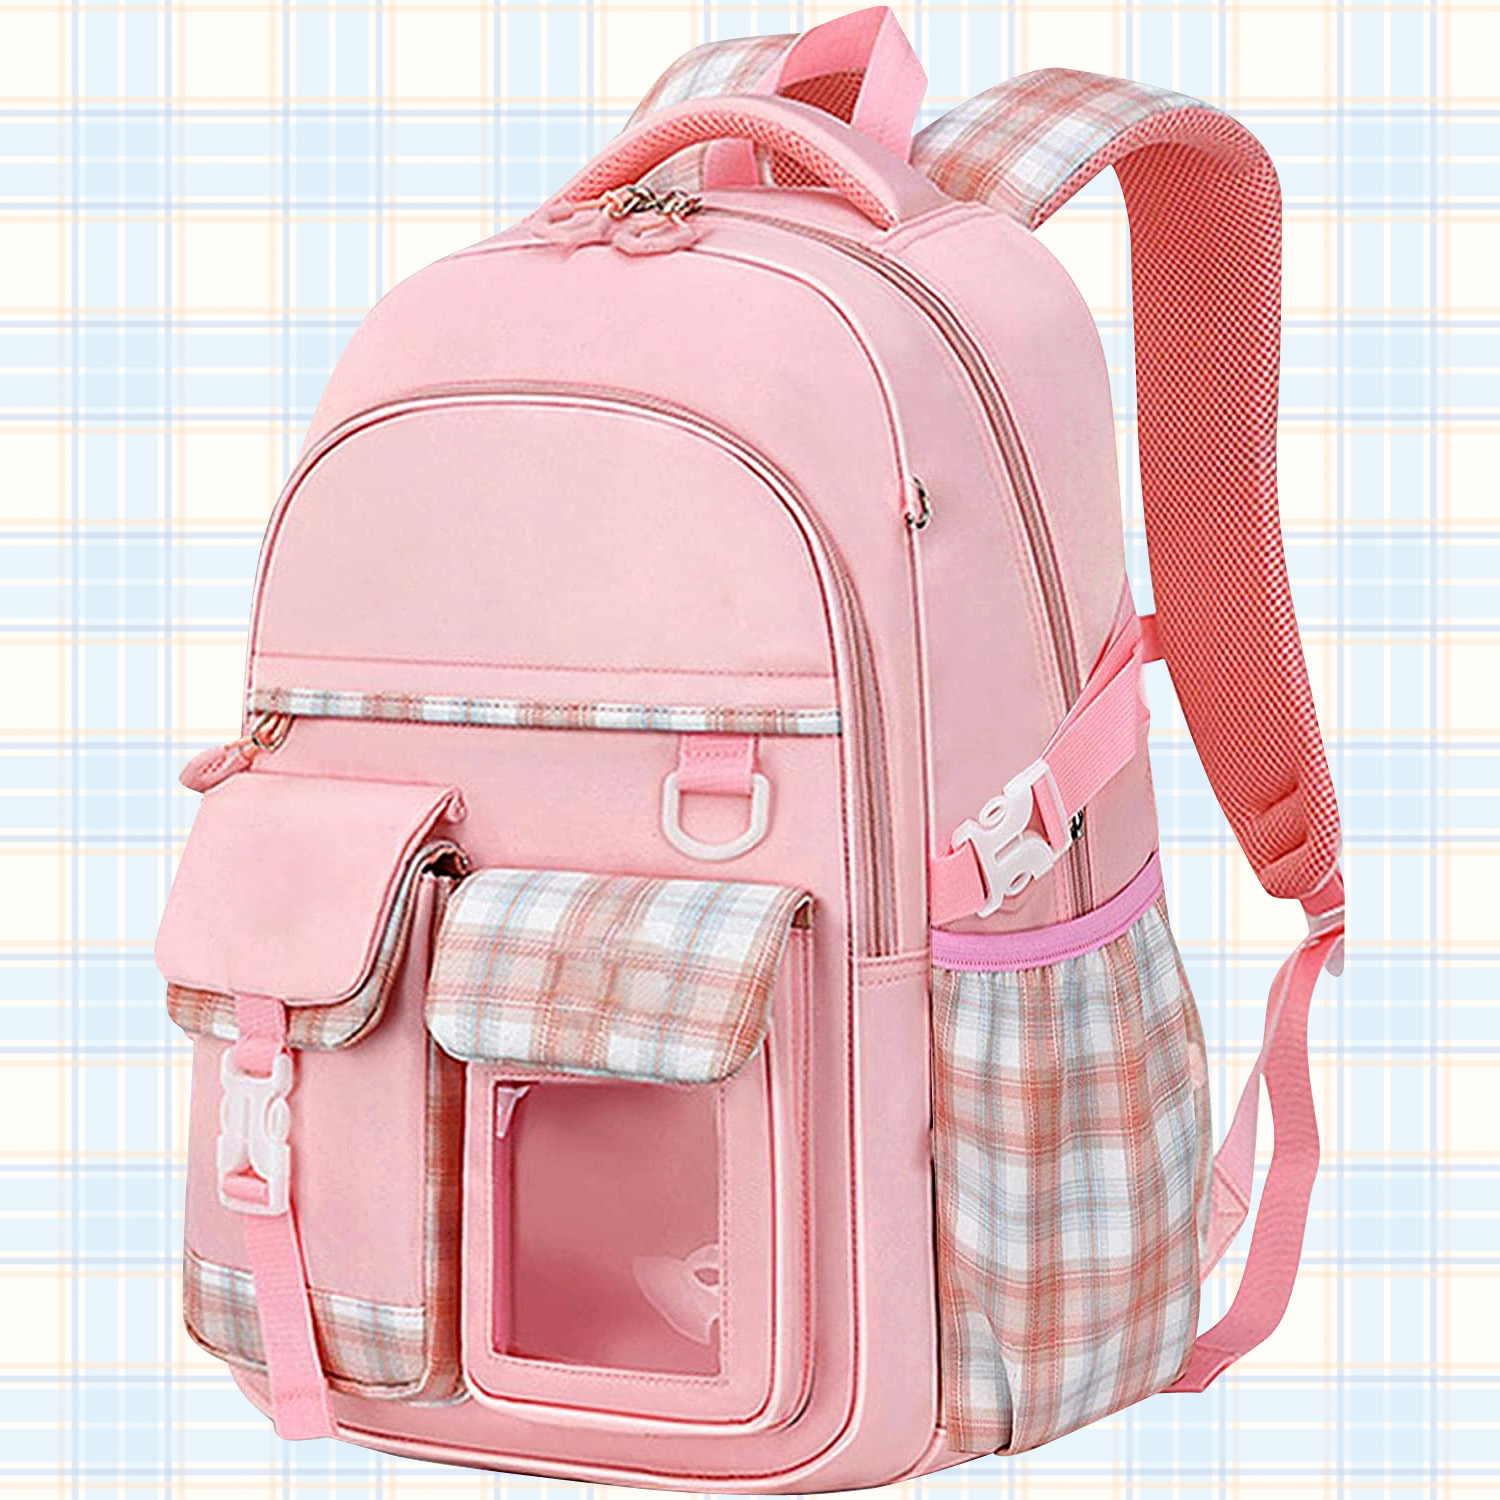 The Best School Bags for Girls & Boys | Clarks